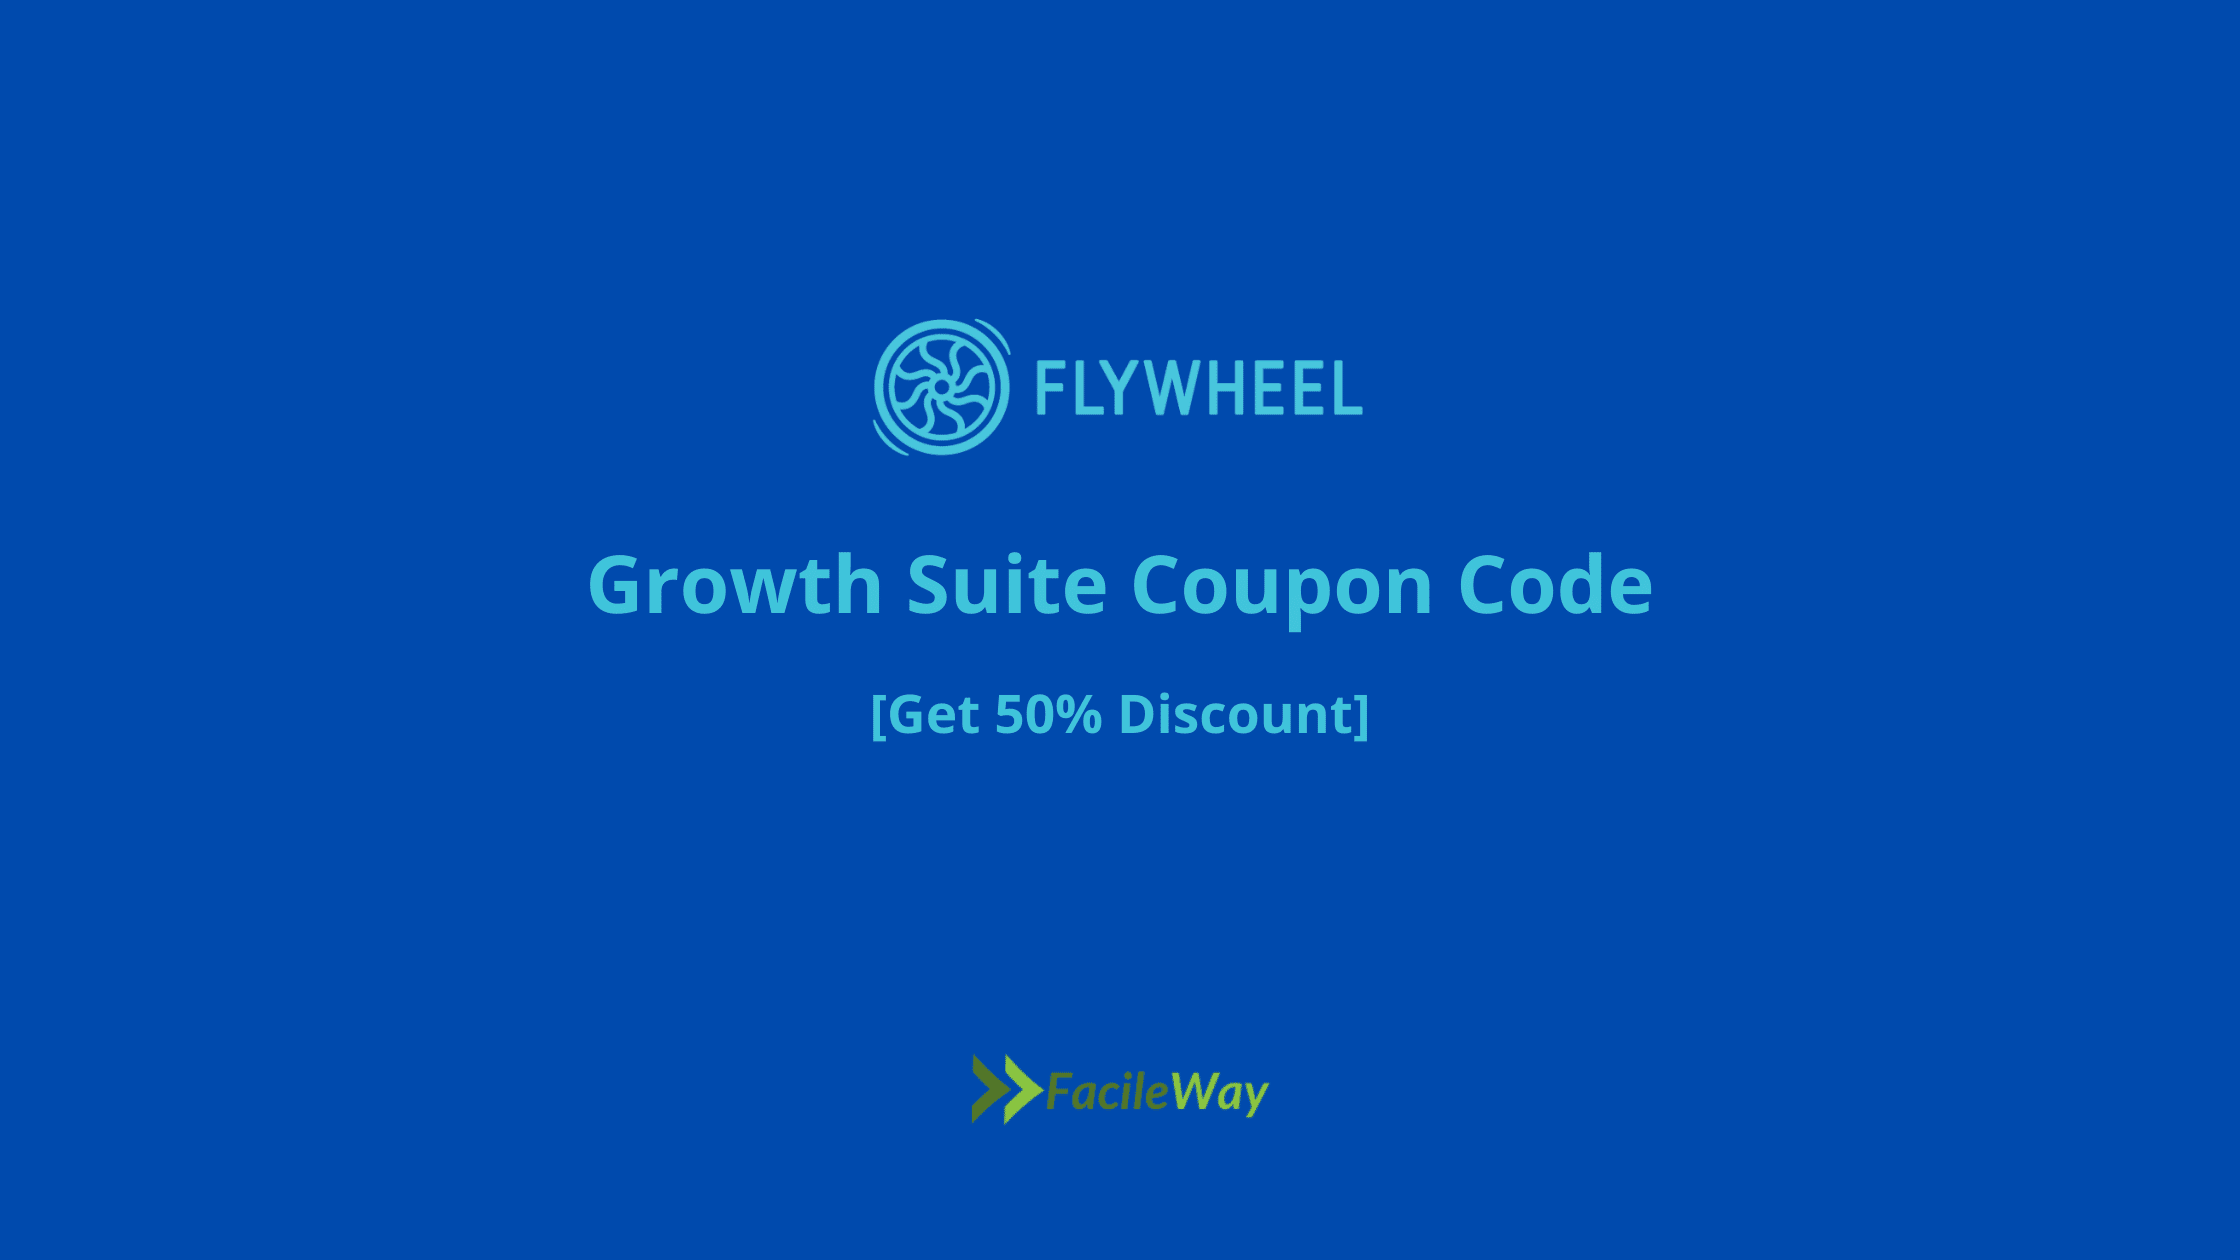 Flywheel Growth Suite Coupon Code